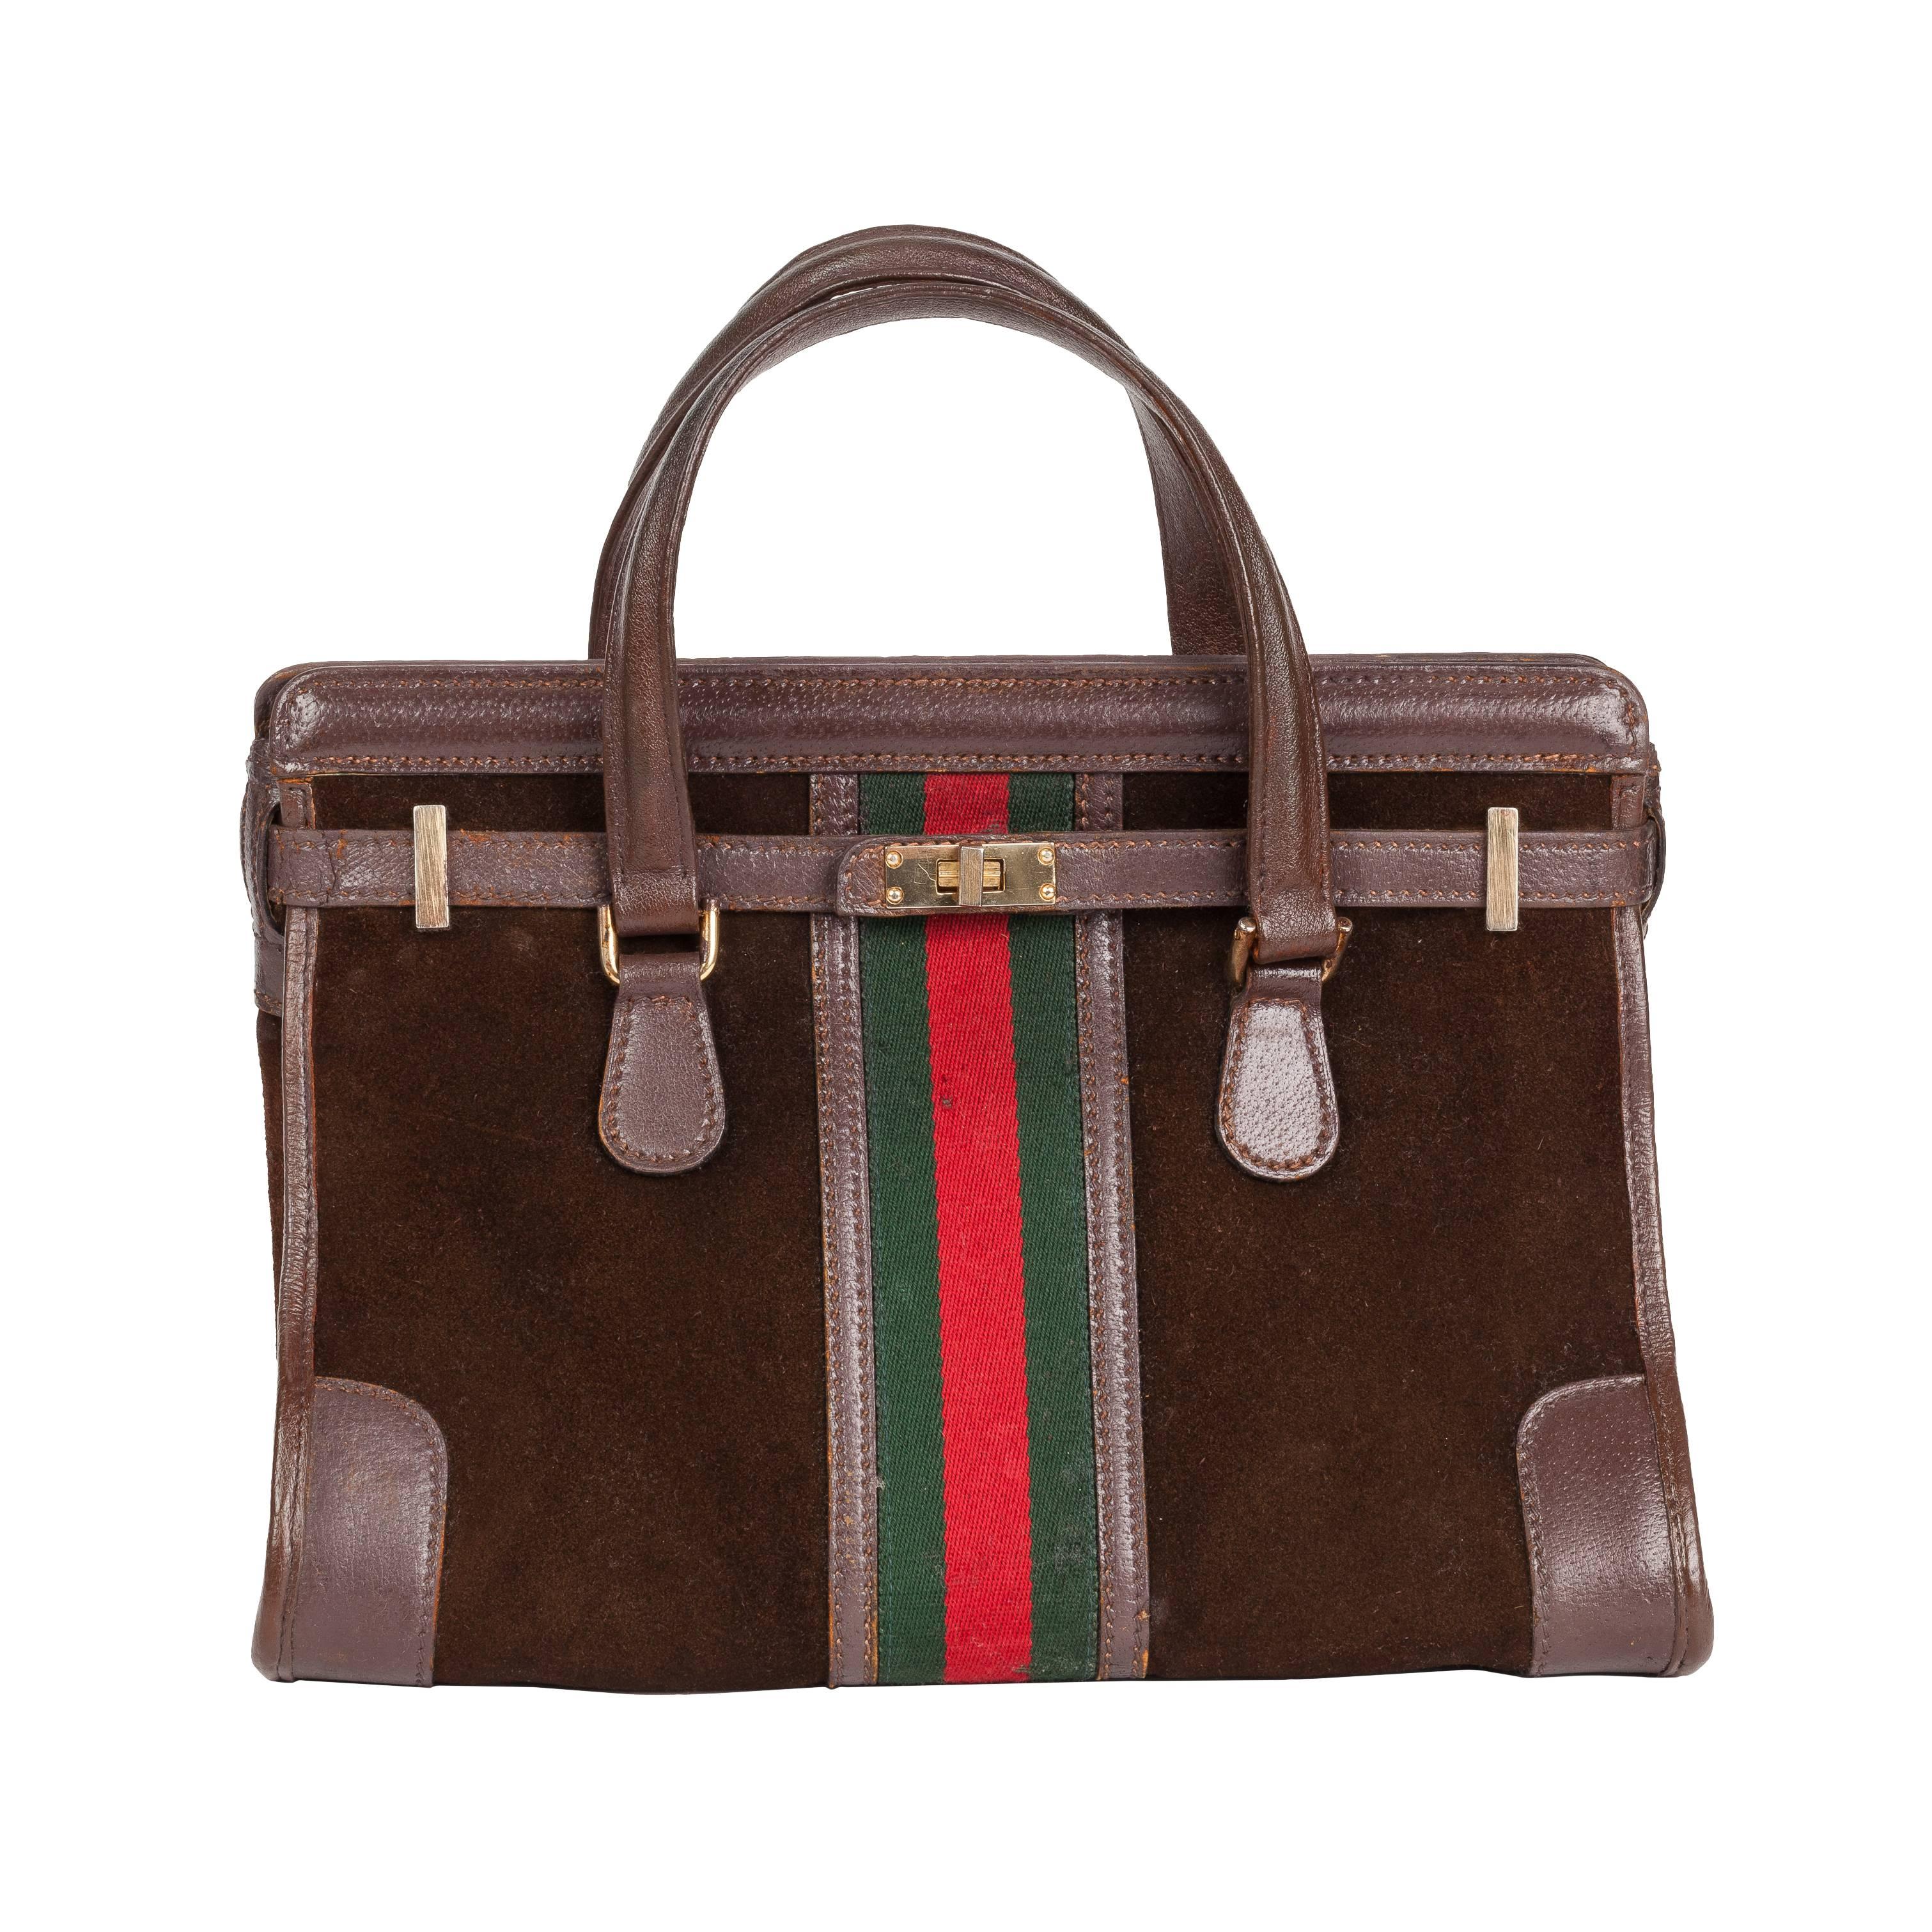 Rare 1970s Gucci Brown Suede Doctor's Bag Handbag Tote w/Gucci Racer Stripe